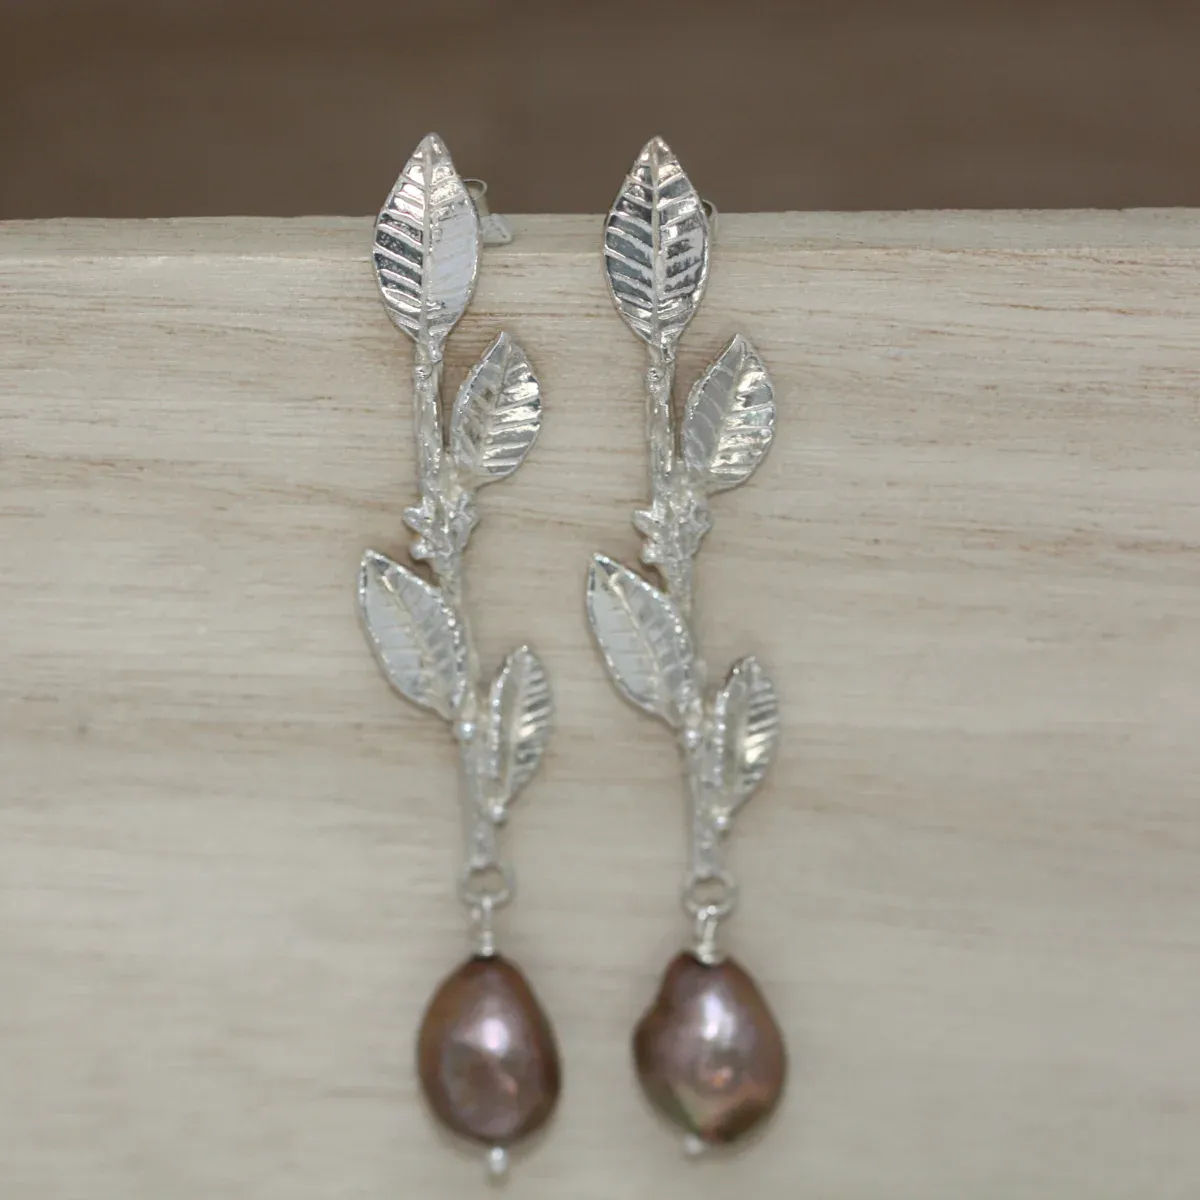 Statement Silver Laurel Leaf and Pearl Earrings, Long Drop Wedding Earrings - Boutee